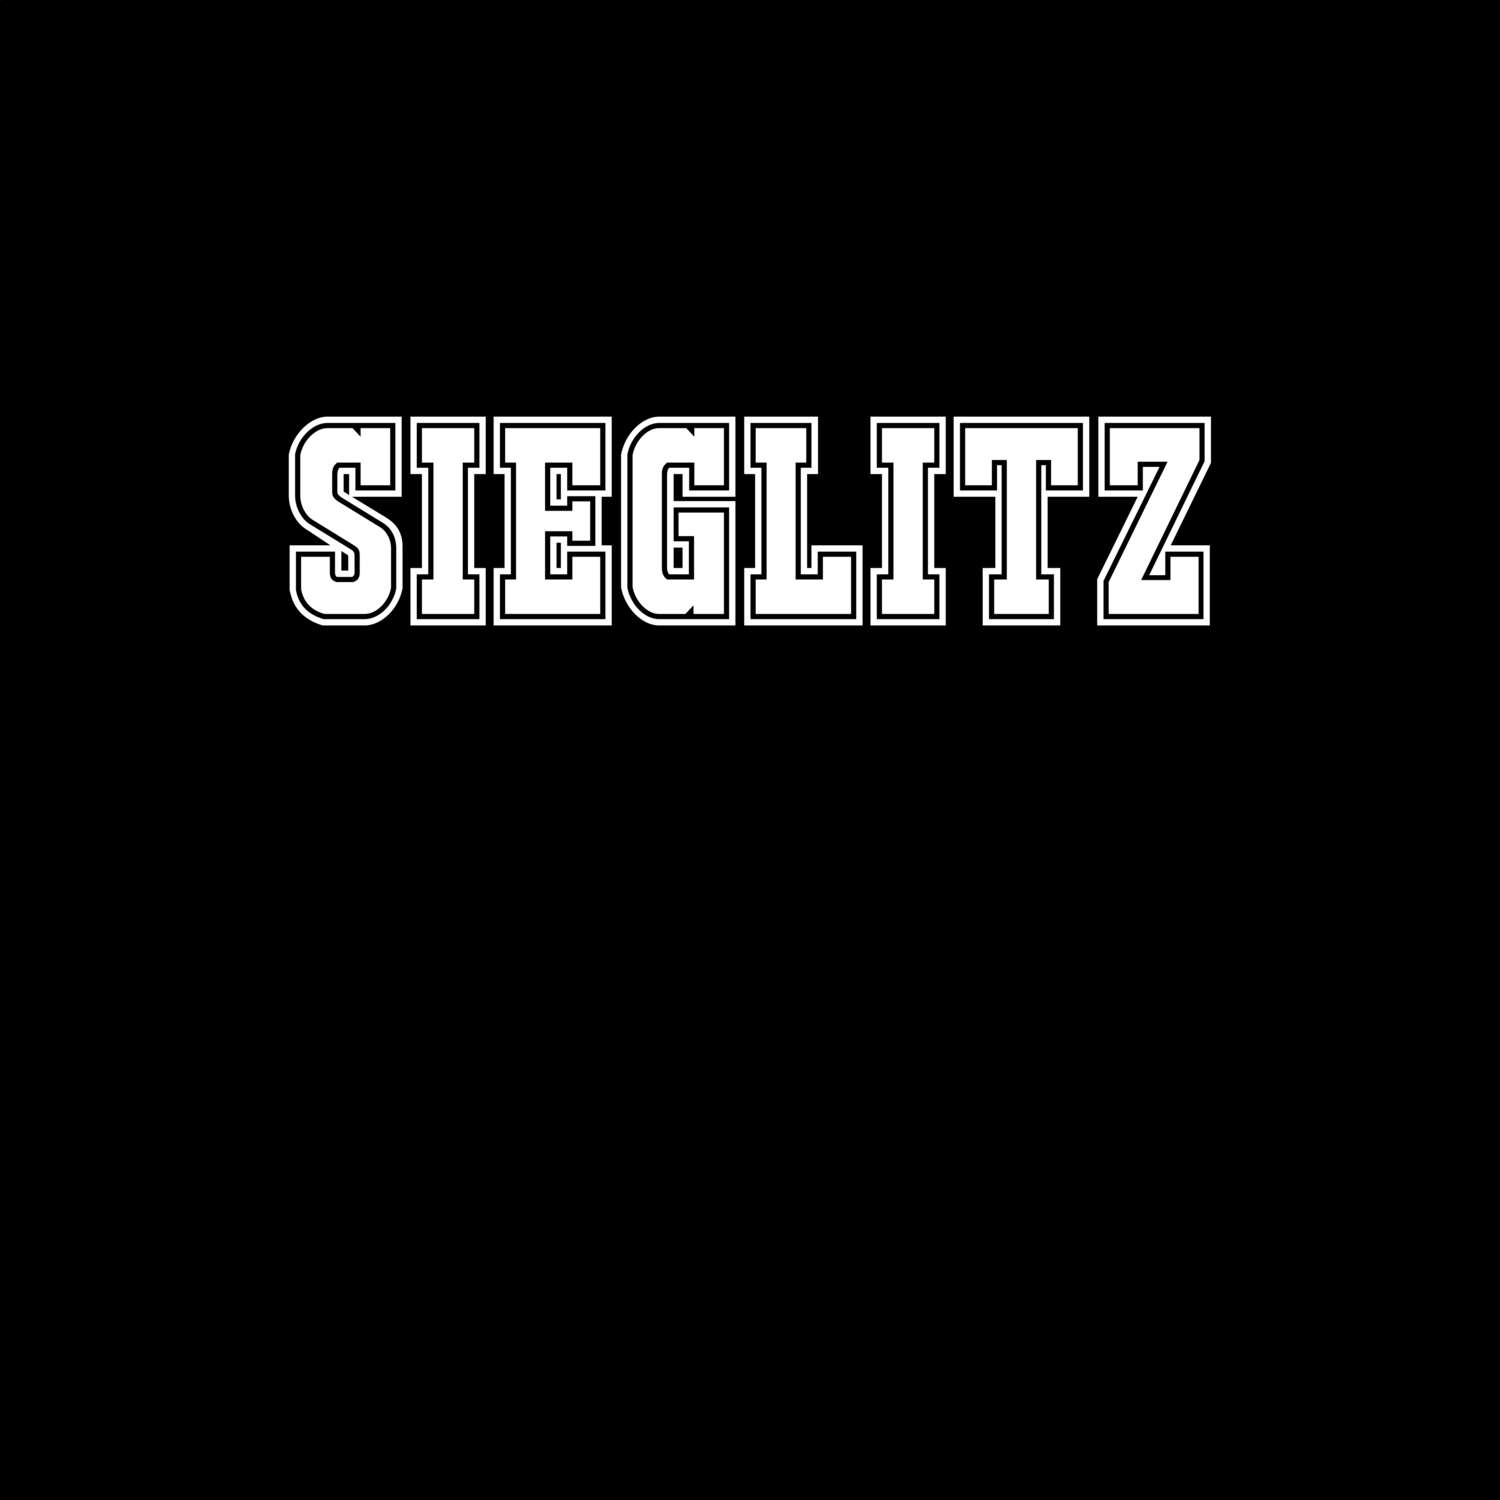 Sieglitz T-Shirt »Classic«